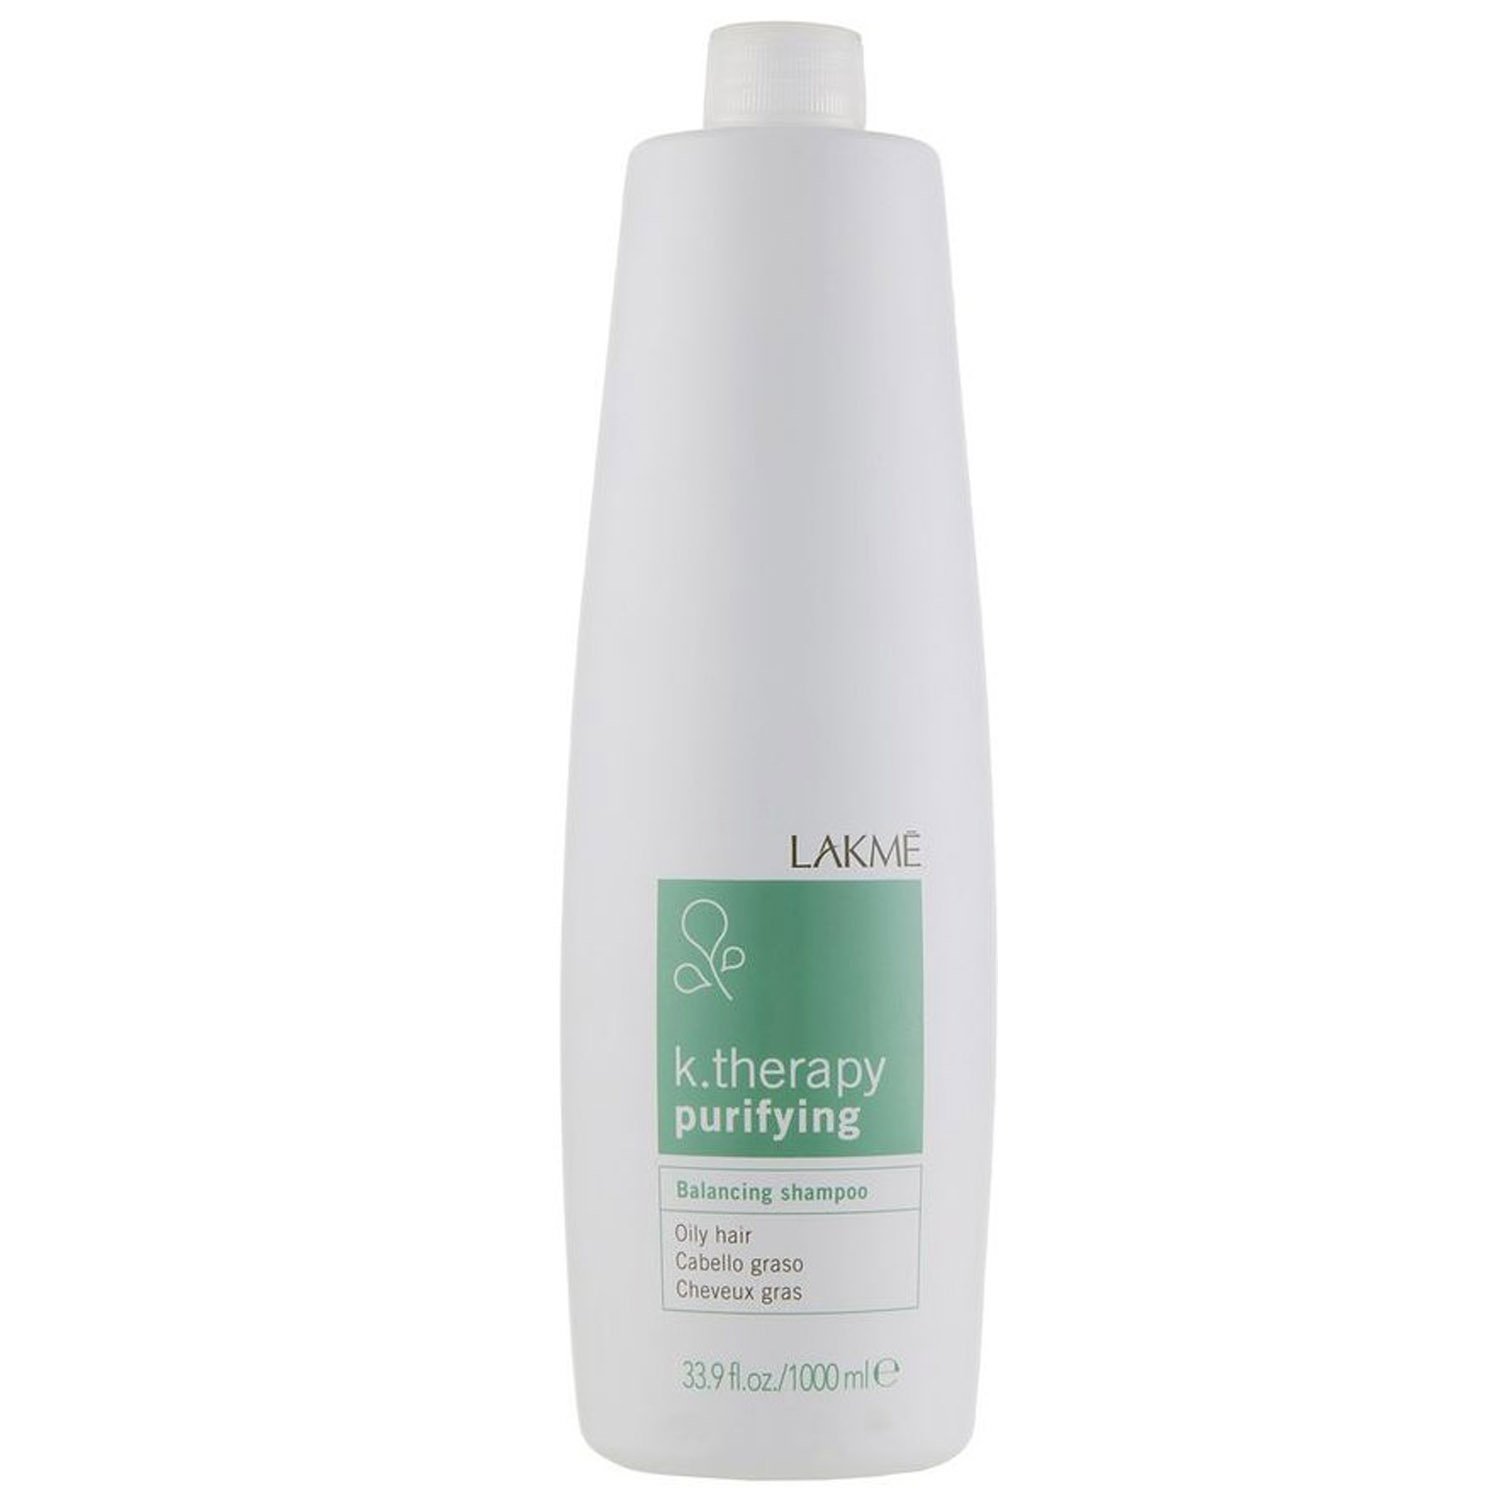 Шампунь Lakme K.Therapy Purifying Balancing Shampoo, балансирующий, для жирных волос, 1000 мл - фото 1